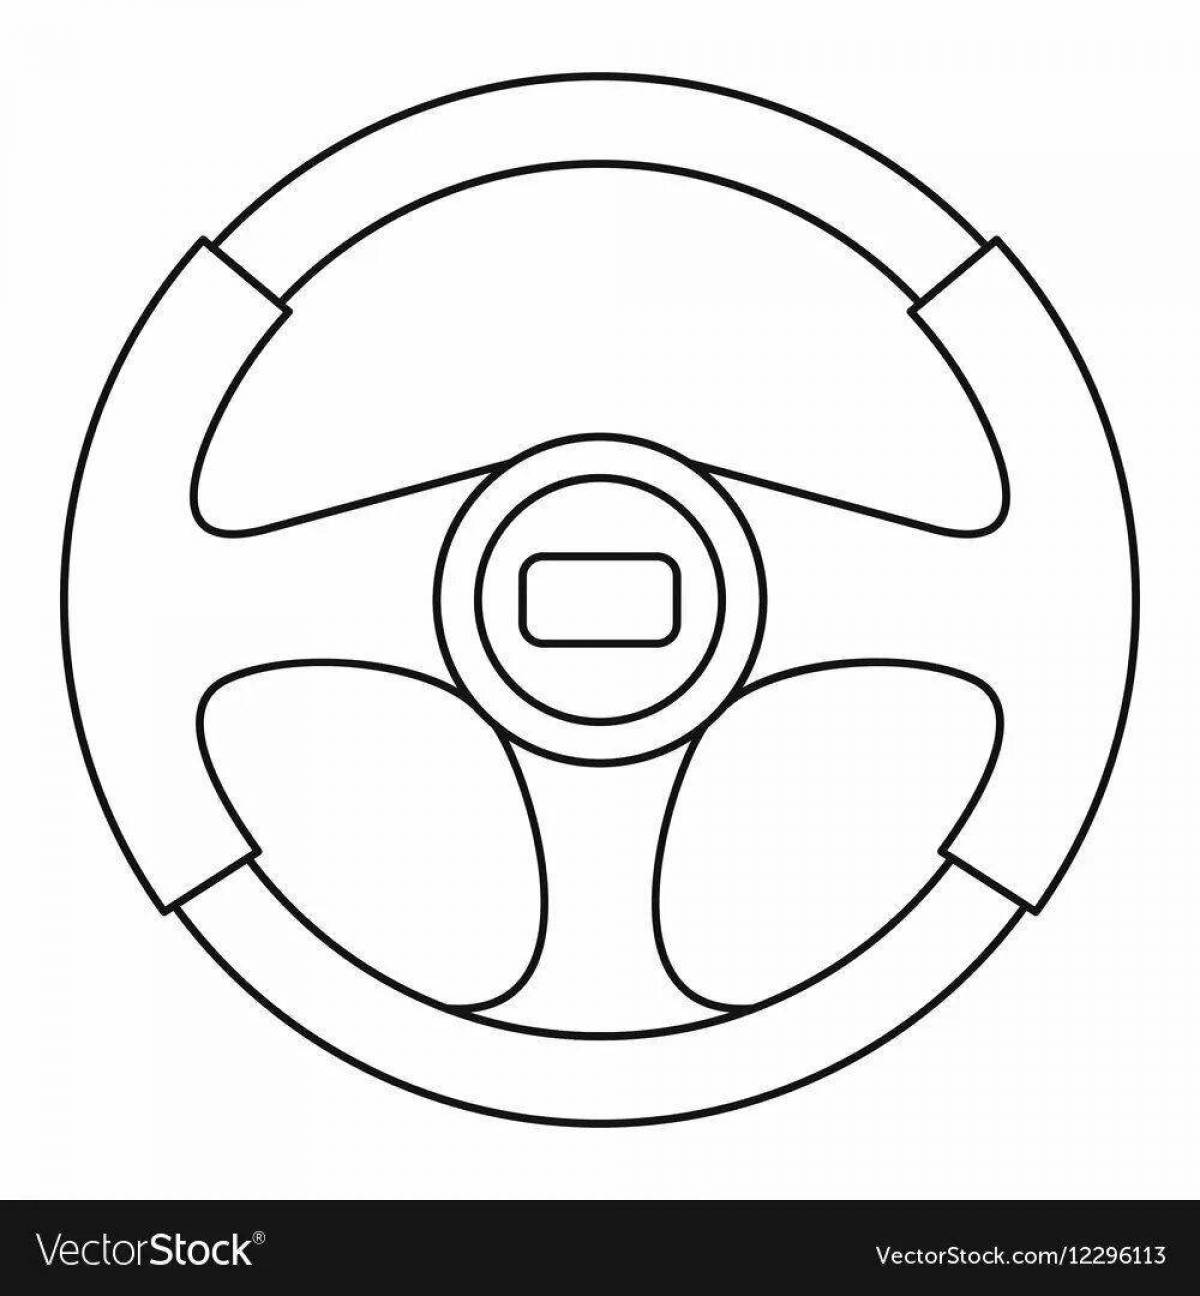 Humorous steering wheel coloring for toddlers